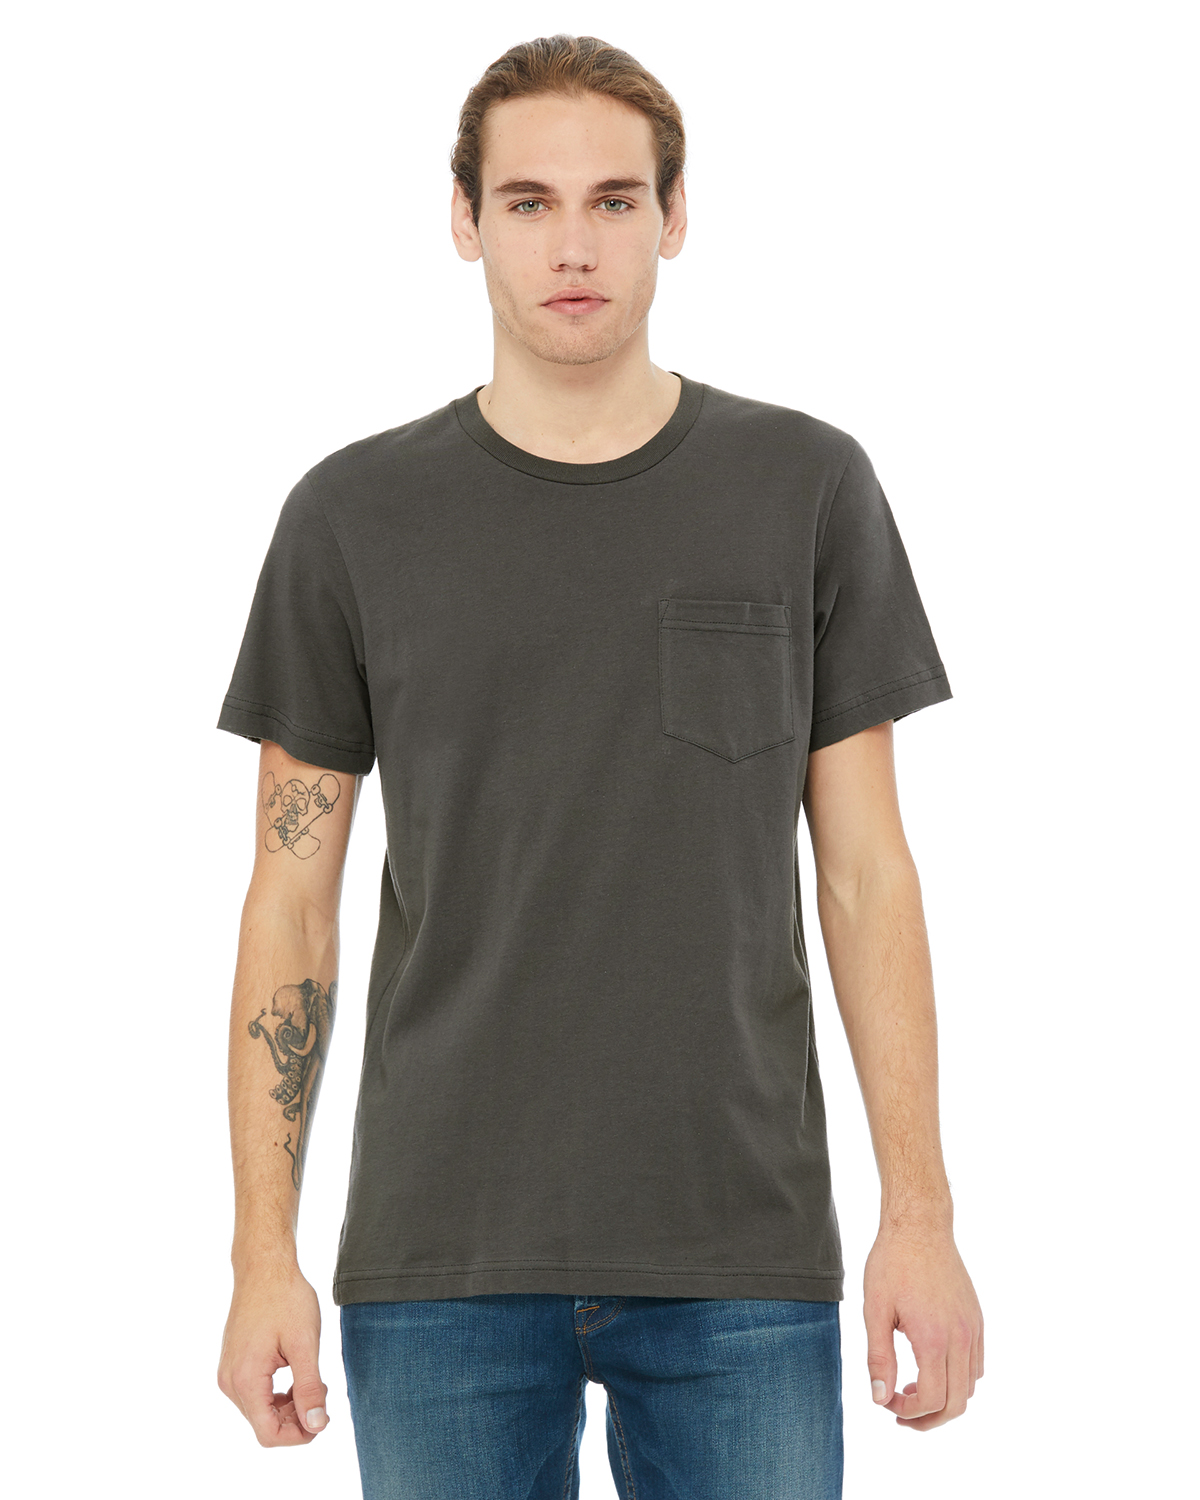 Style # 3021 - Original Label Canvas Mens Jersey Short-Sleeve Pocket T-Shirt Drk Gry Htr/Blk Canvas Bella S - By Bella 